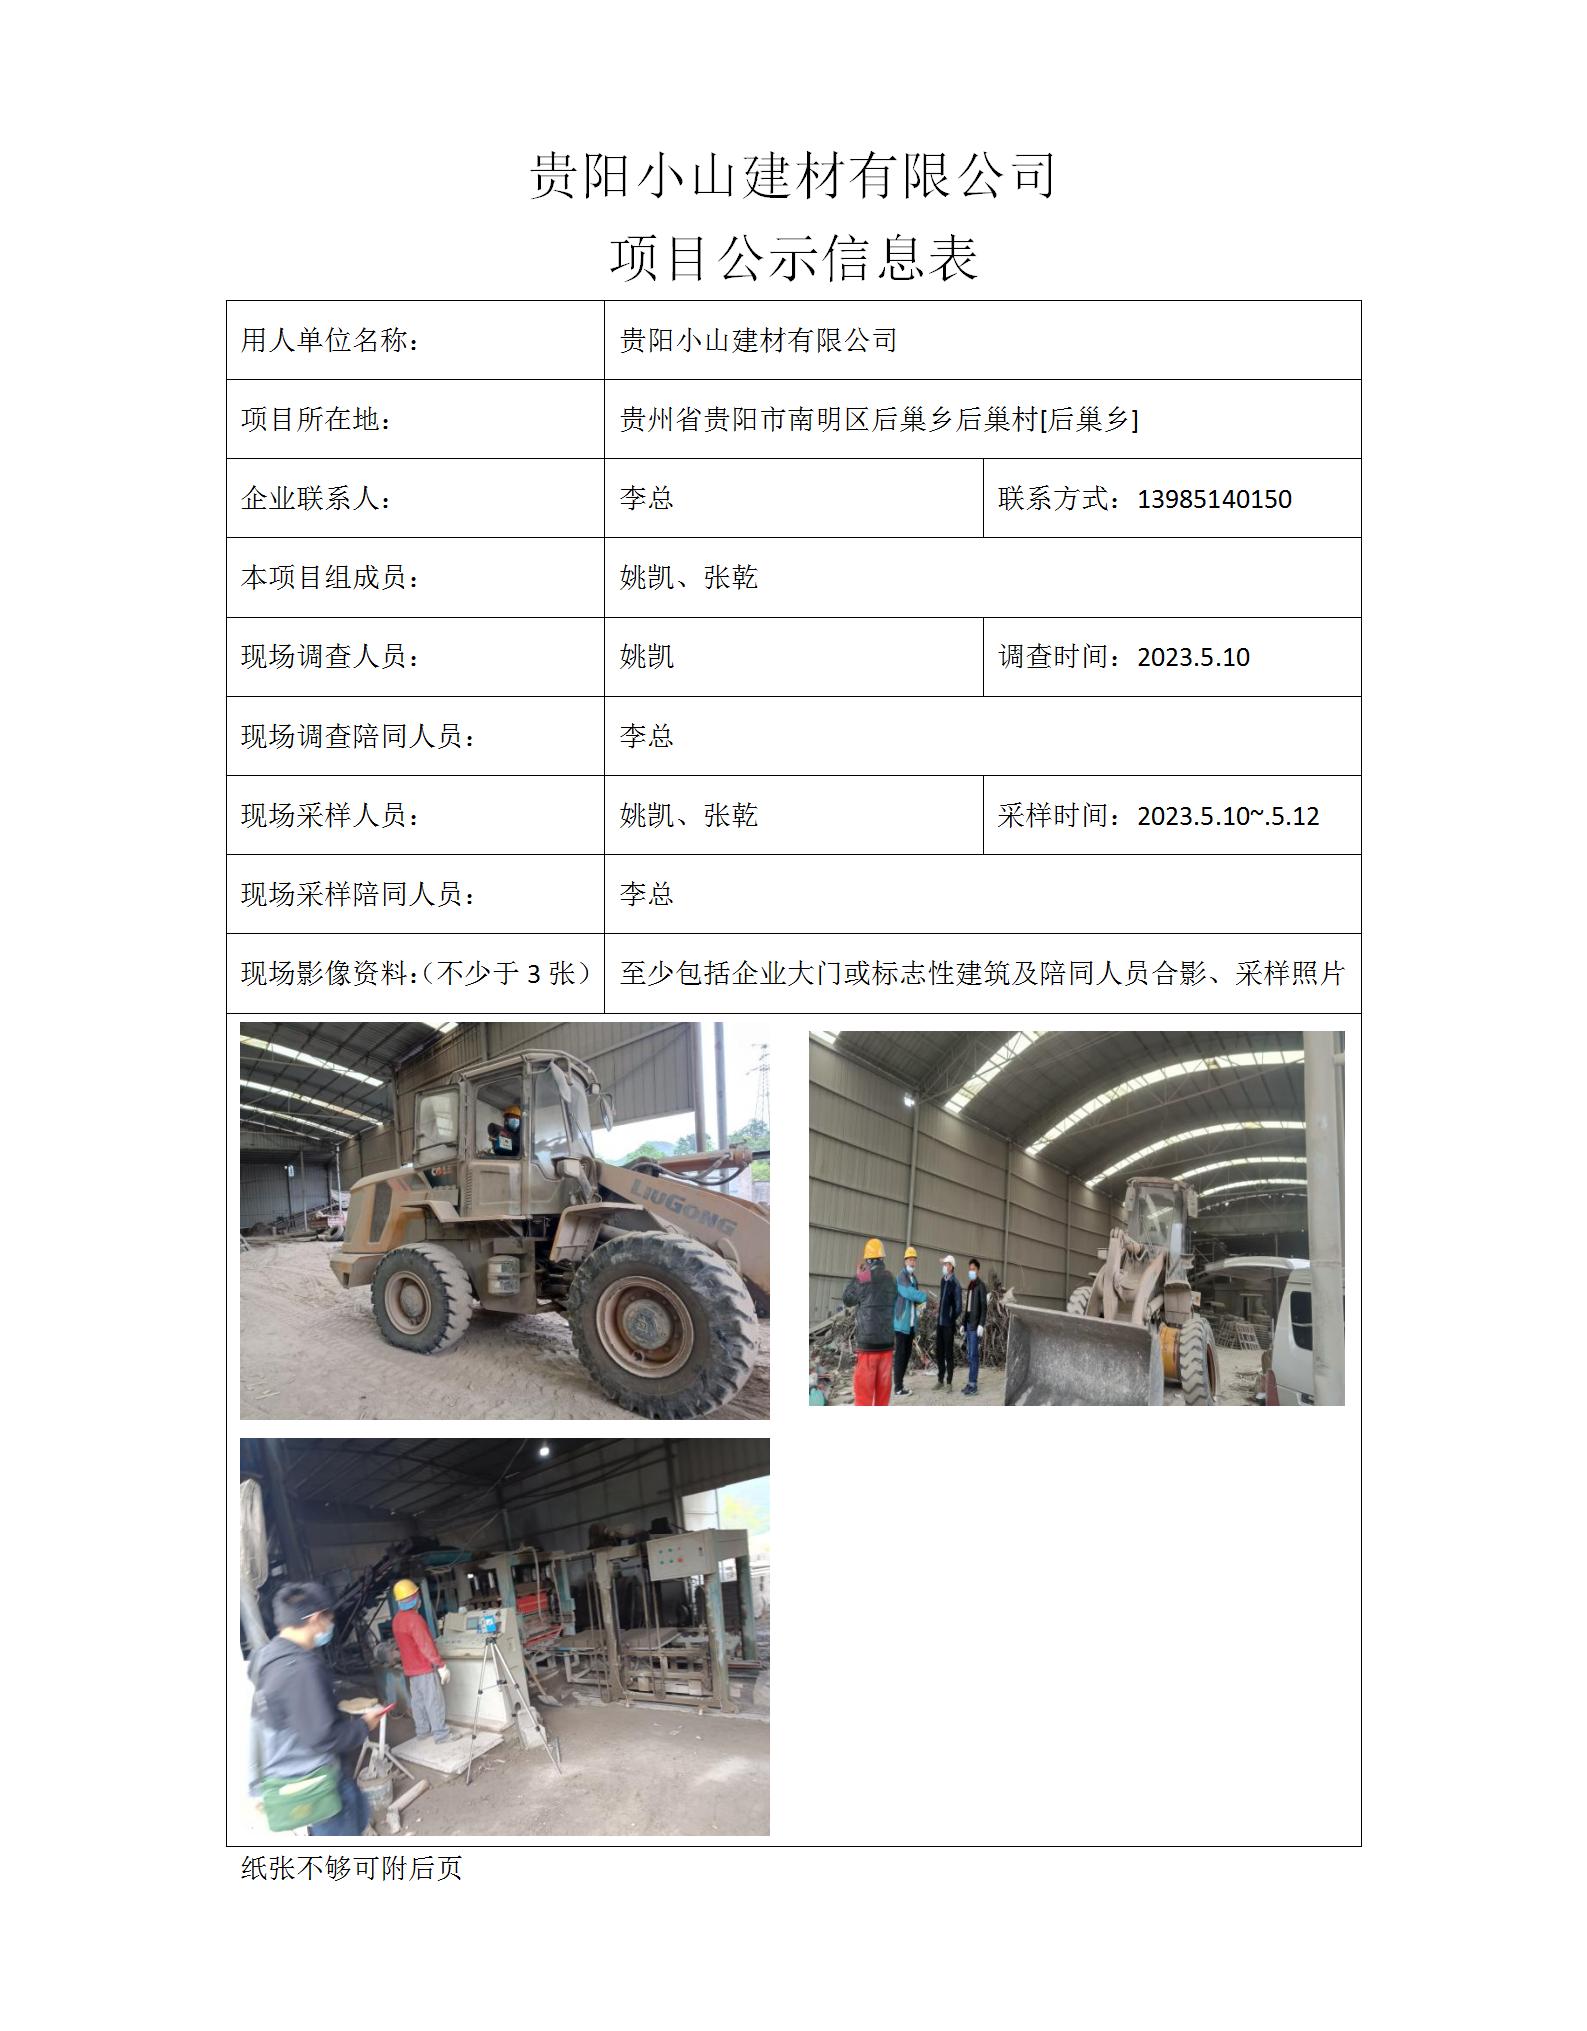 MD2023-0050（XP-F）贵阳小山建材有限公司项目公示信息表_01.jpg